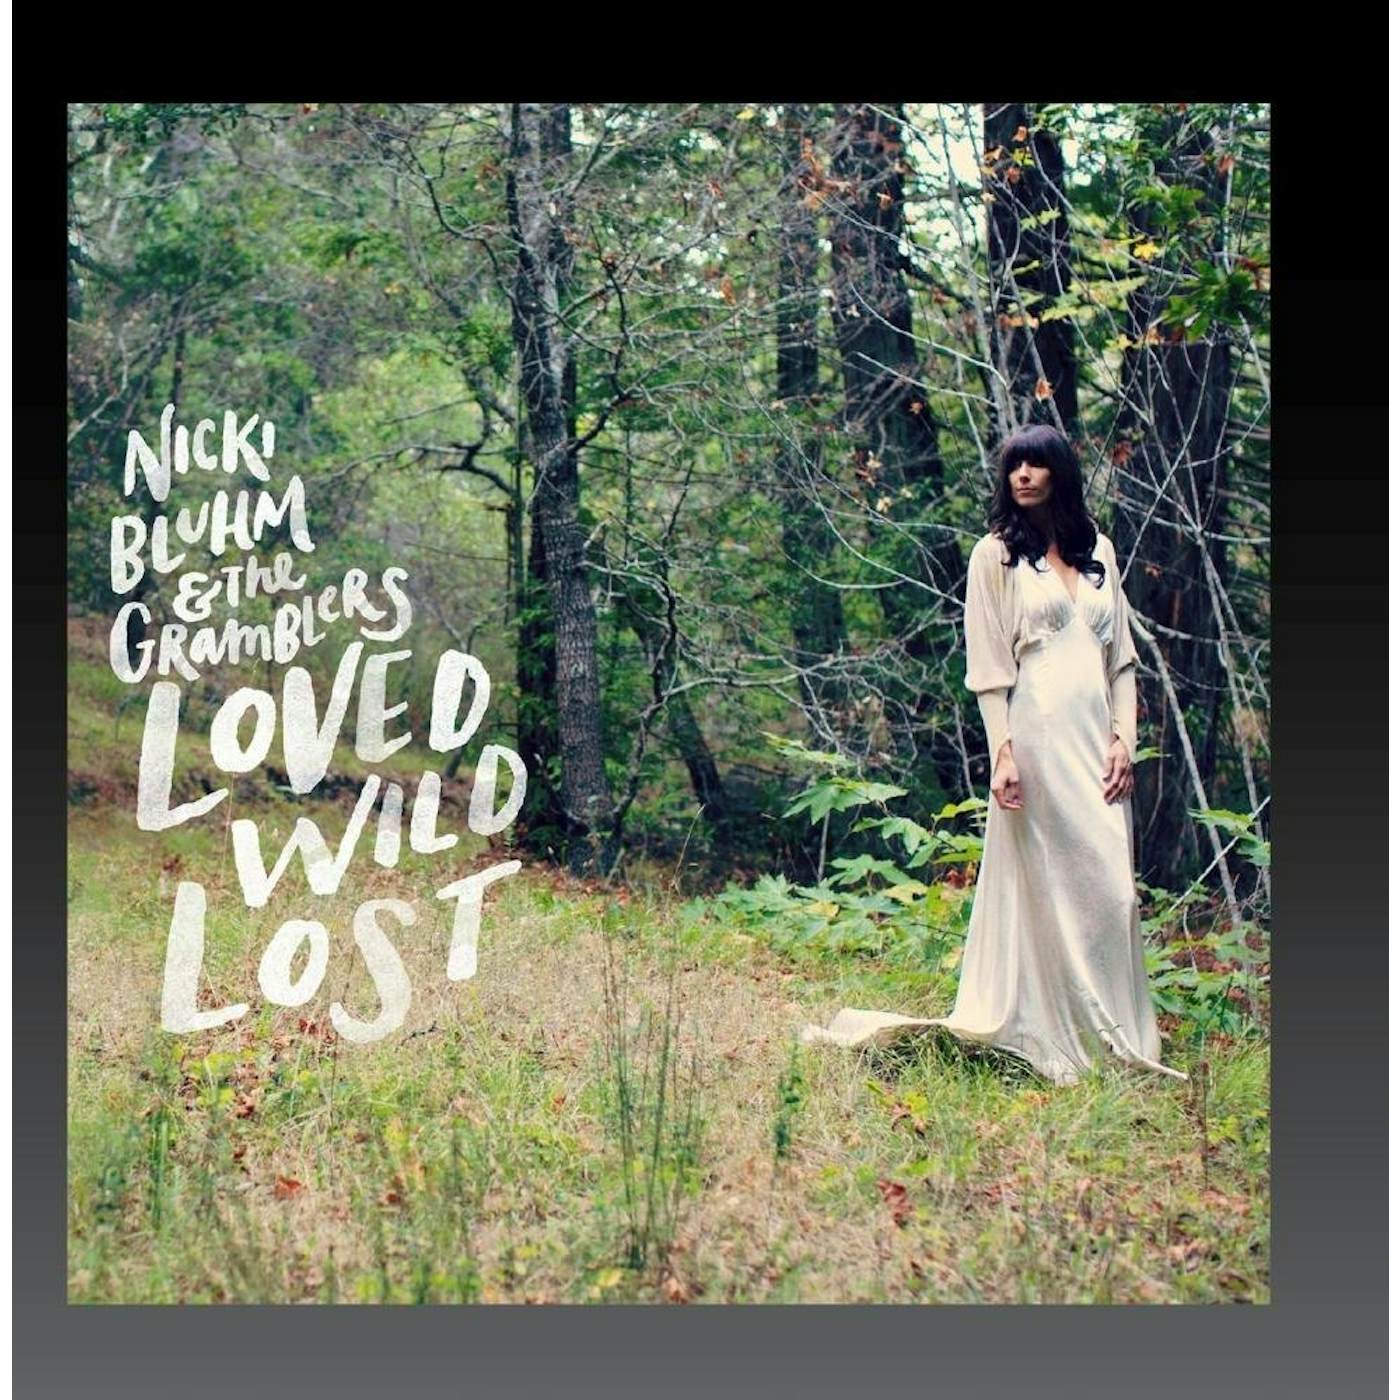 Nicki Bluhm LOVED WILD LOST CD